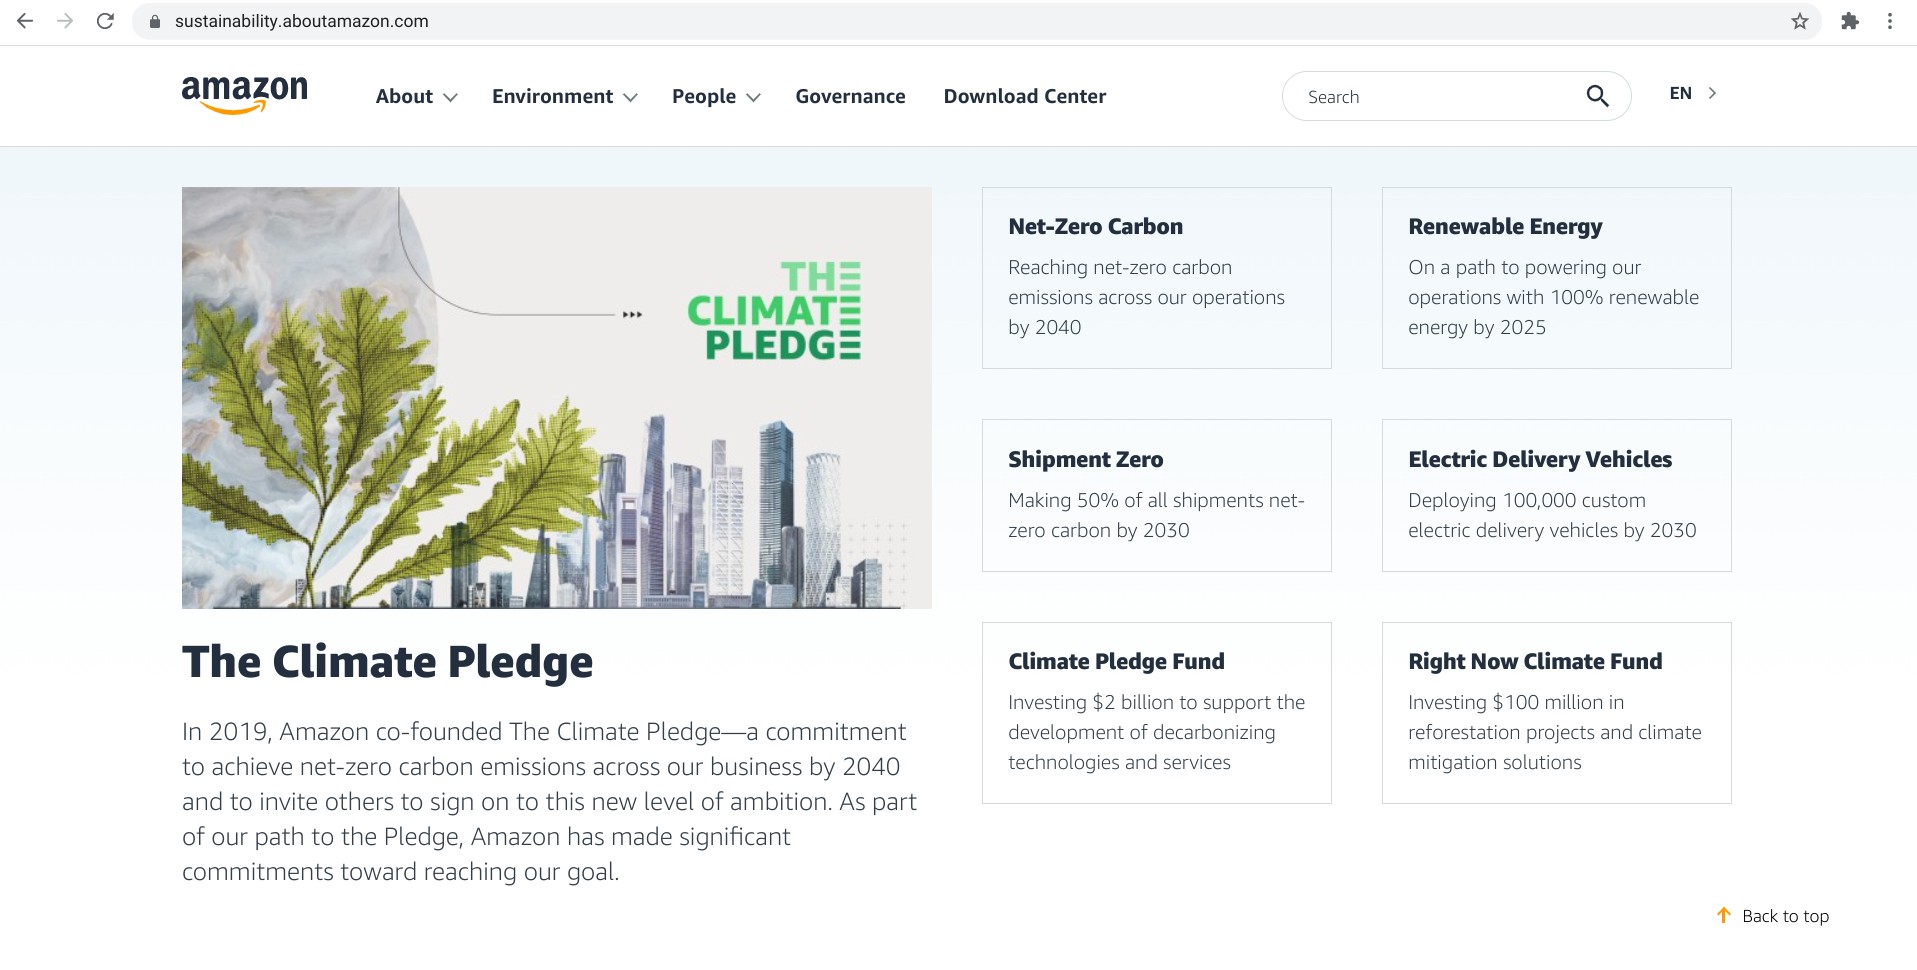 Screenshot of sustainability.aboutamazon.com displaying Amazon’s climate pledge